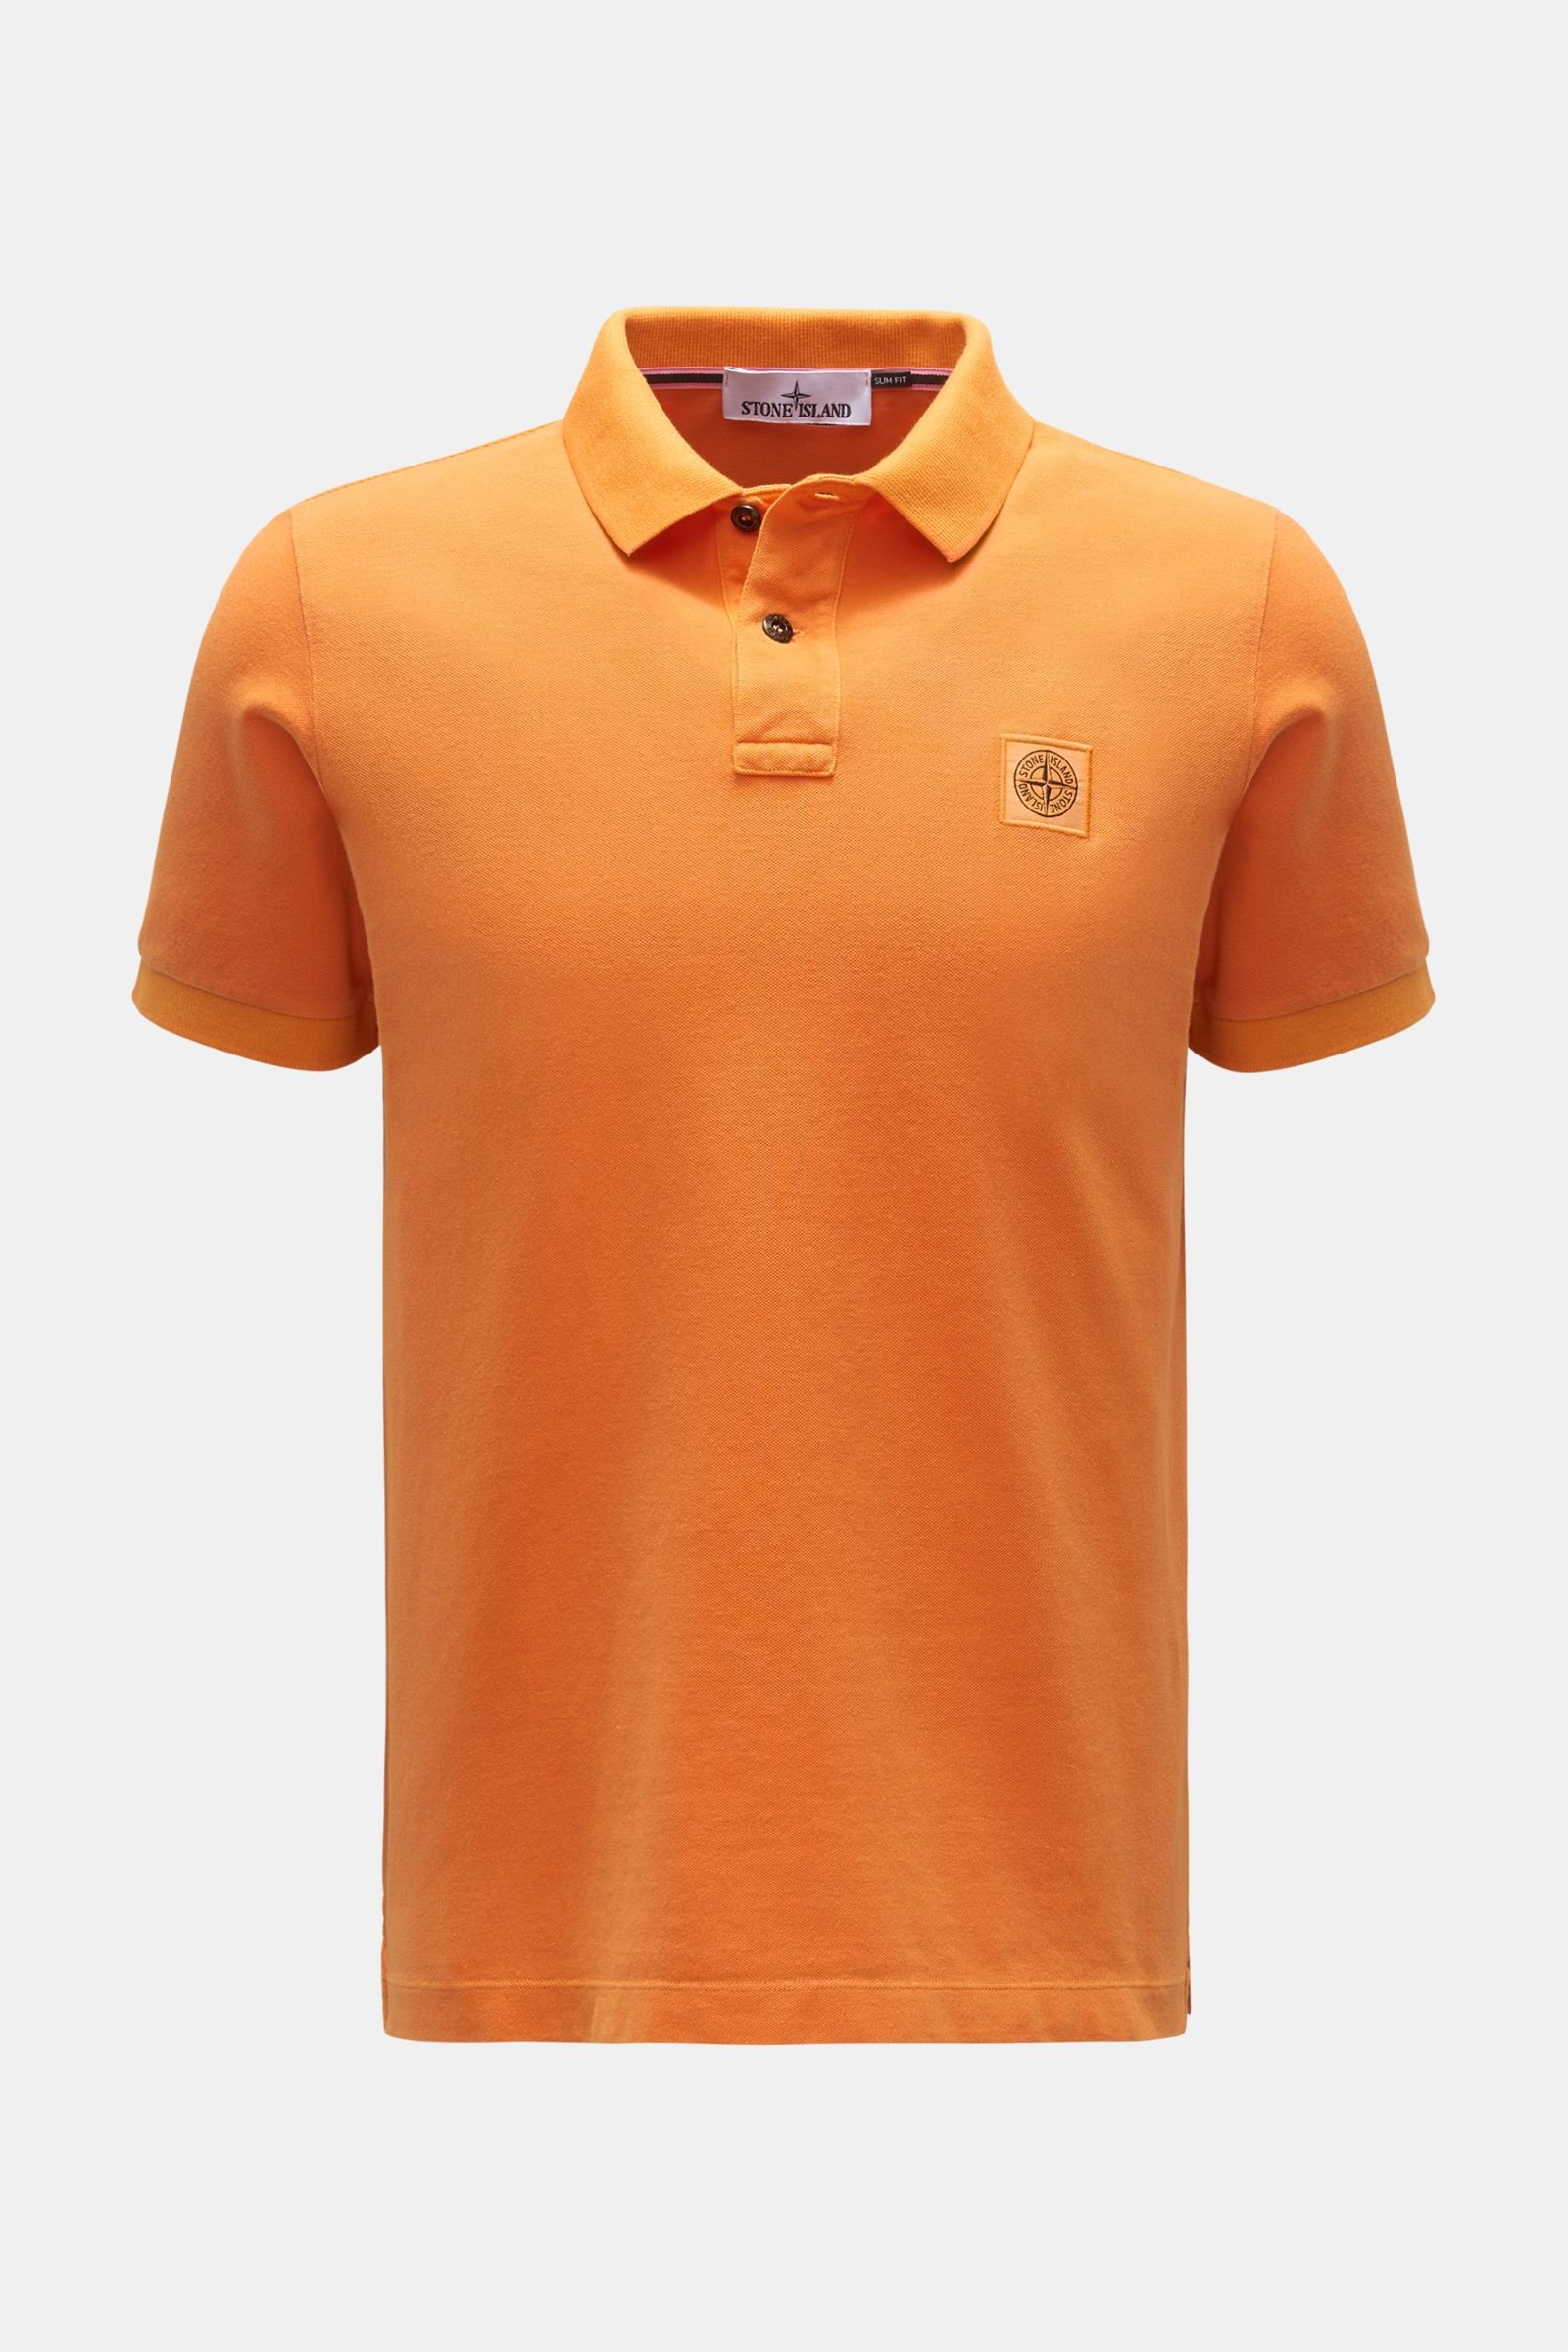 Polo shirt orange 